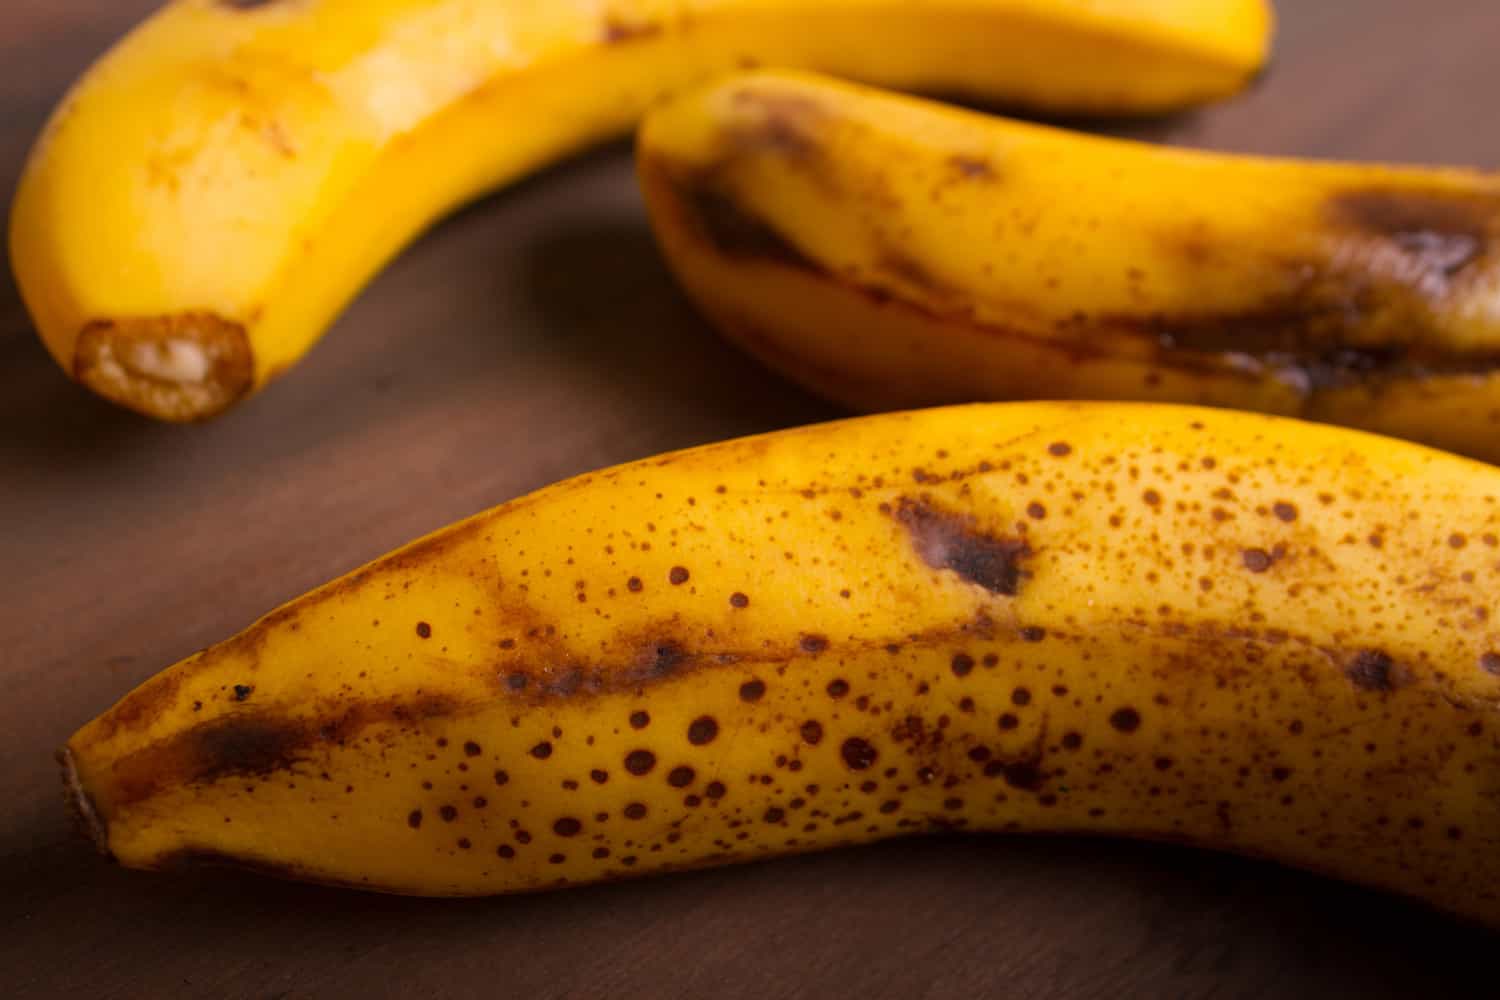 Ripe organic bananas on wooden background